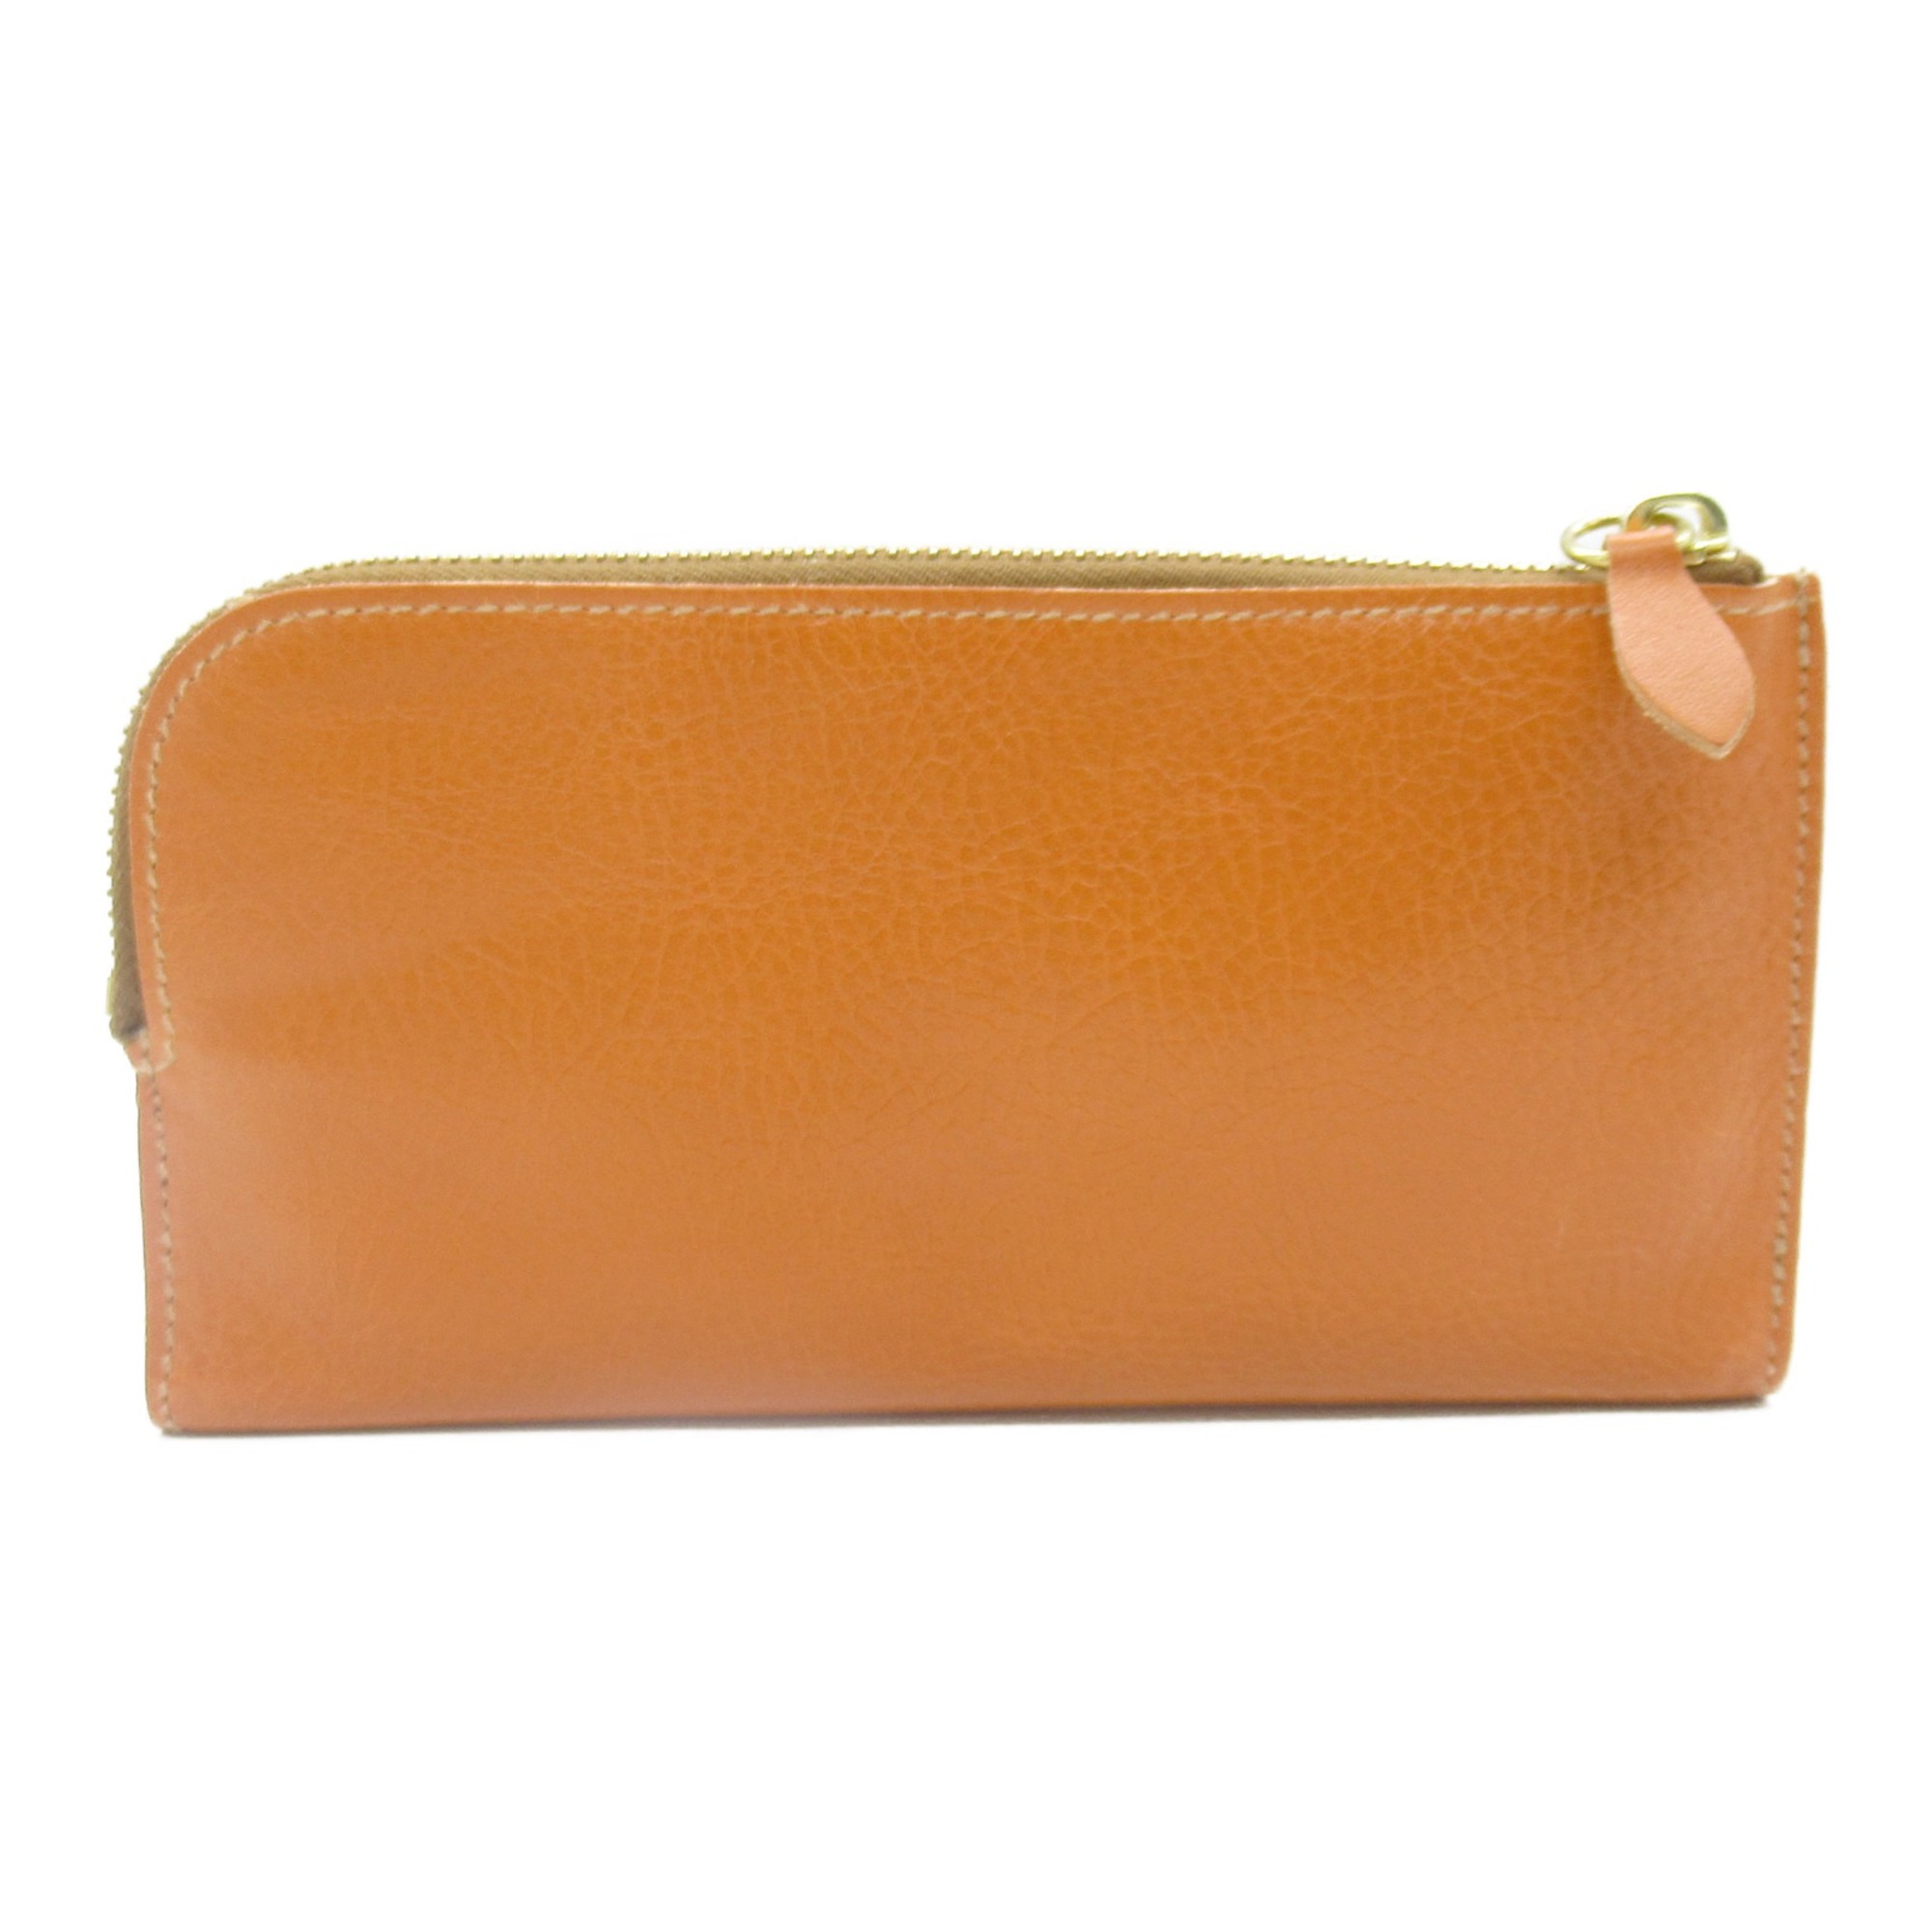 IL BISONTE L-shaped ZIP Wallet purse Brown Caramel leather SCW011CA106